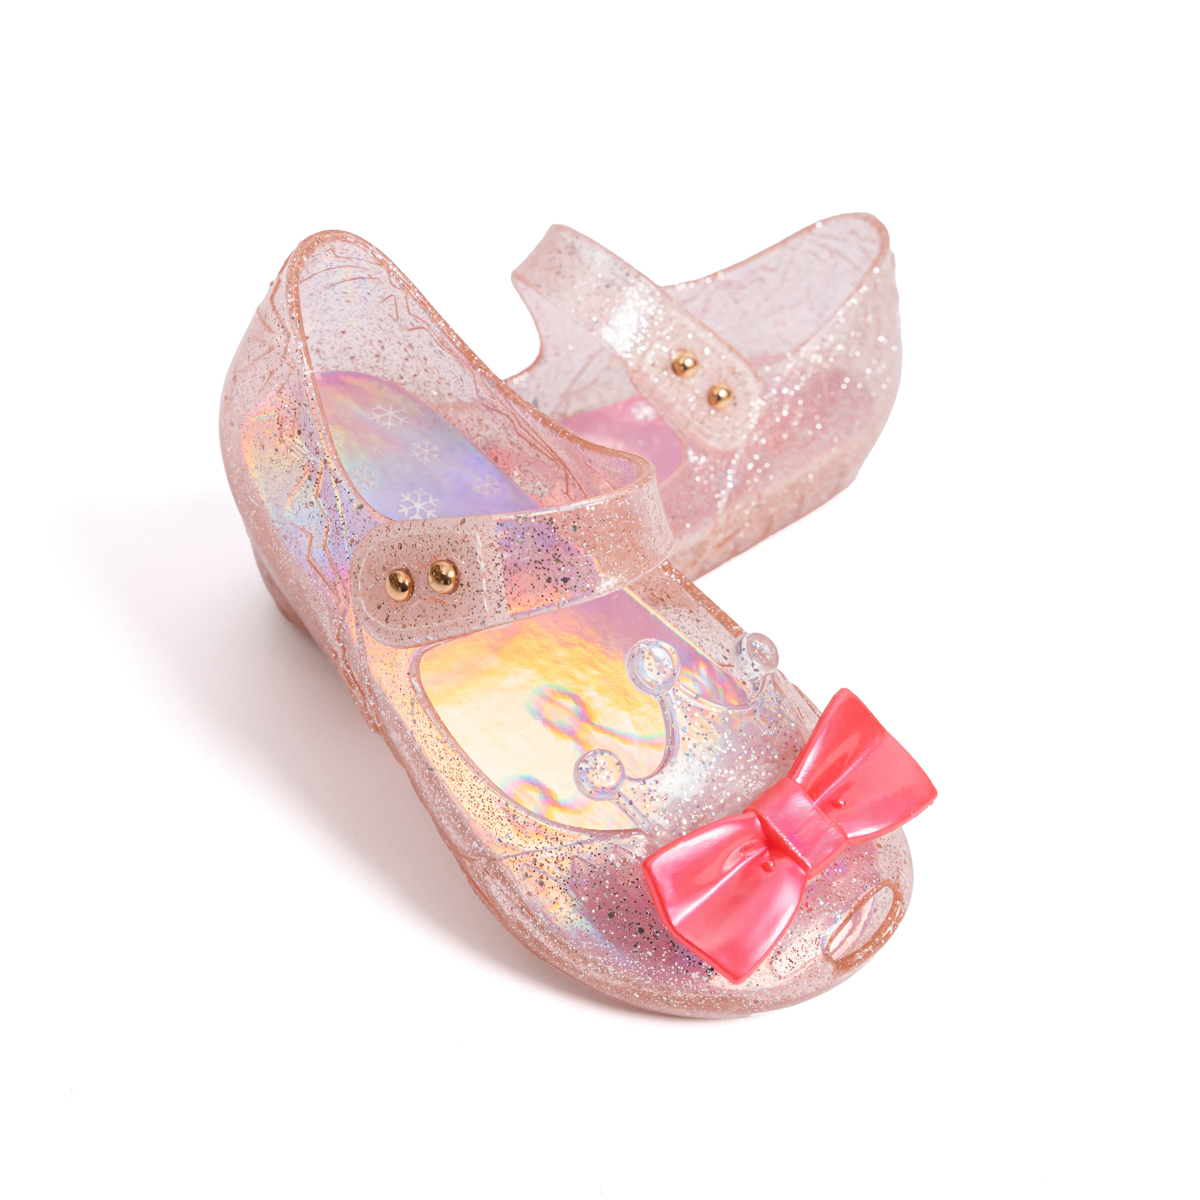 baby shoe wholesale, summer sandals online, manufacturer of baby shoe